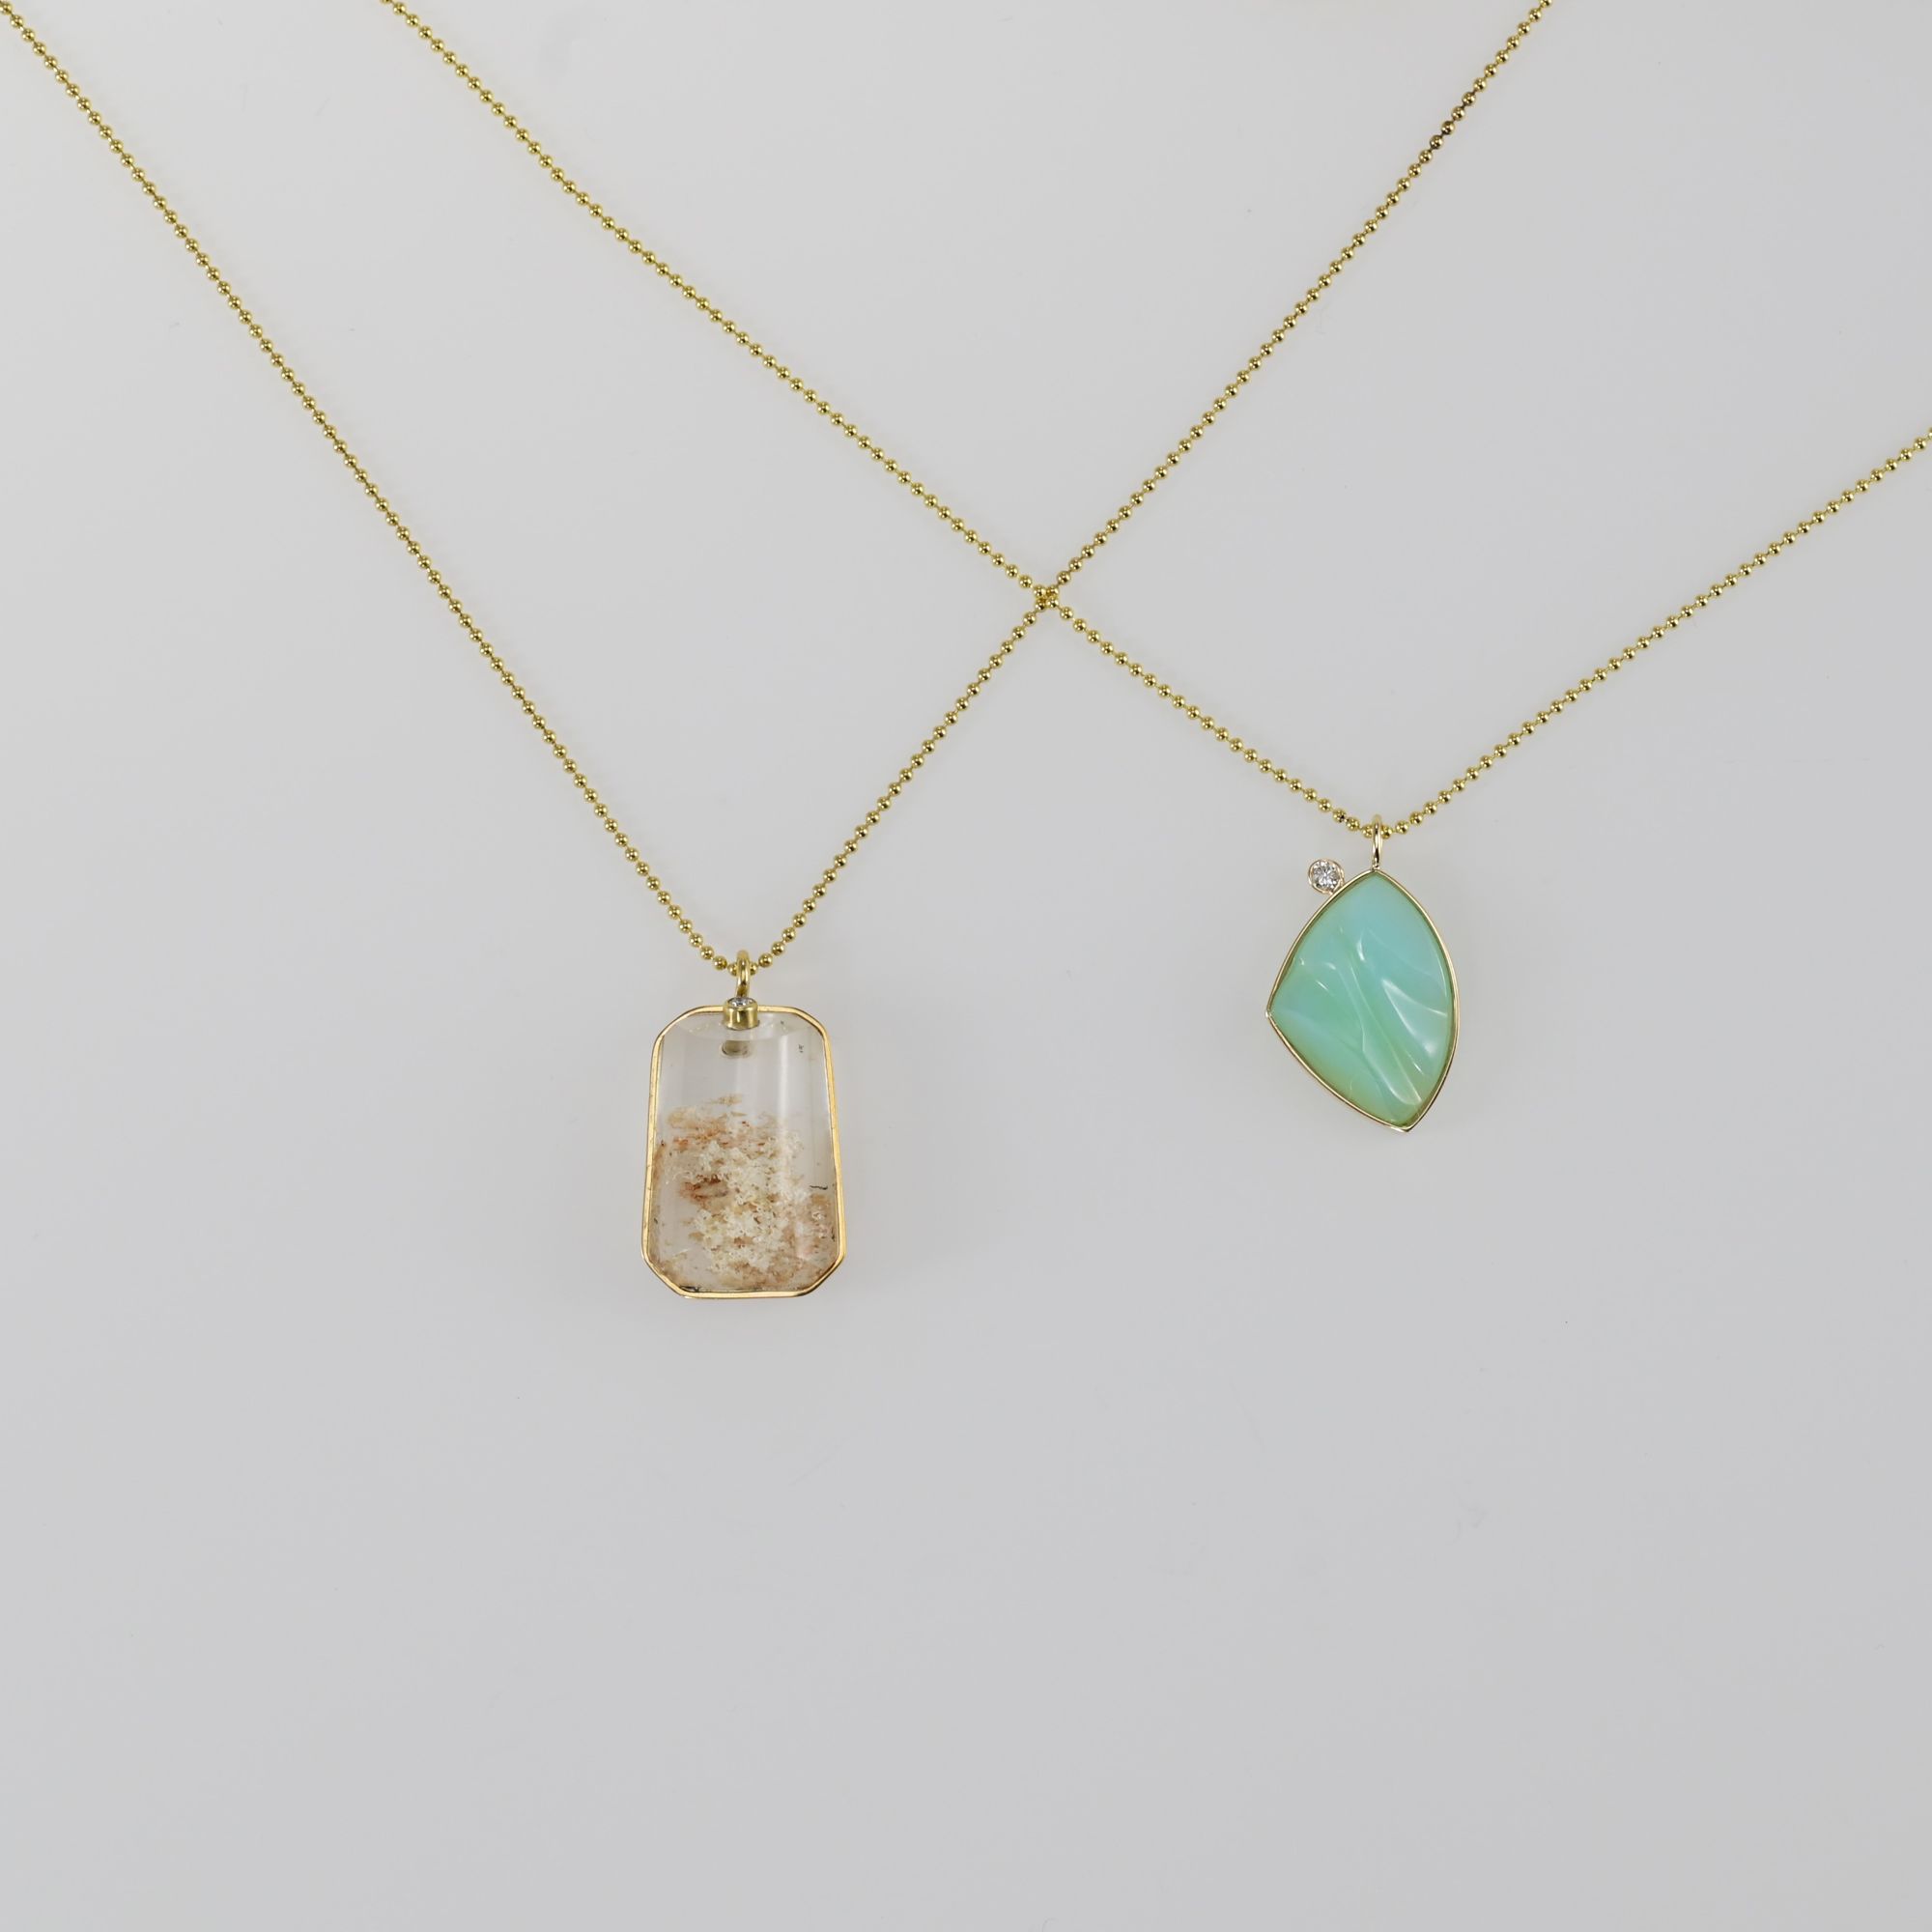 18k fine chain necklaces with unique pendants of Opal & Lodalite